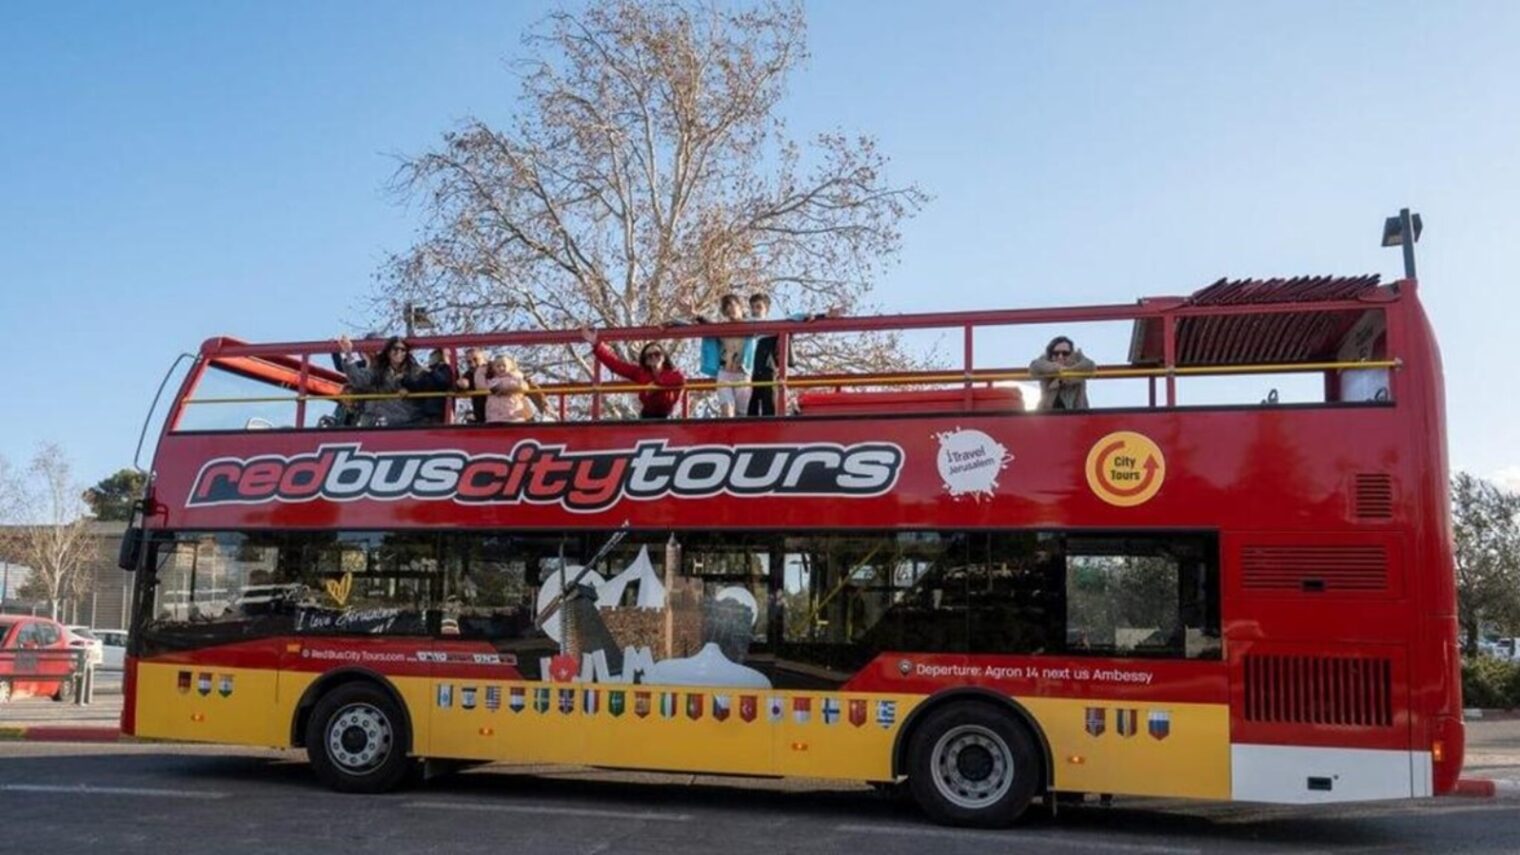 Jerusalem introduces the Red Bus City Tour. Photo by Dana Heftzadi/This is Jerusalem